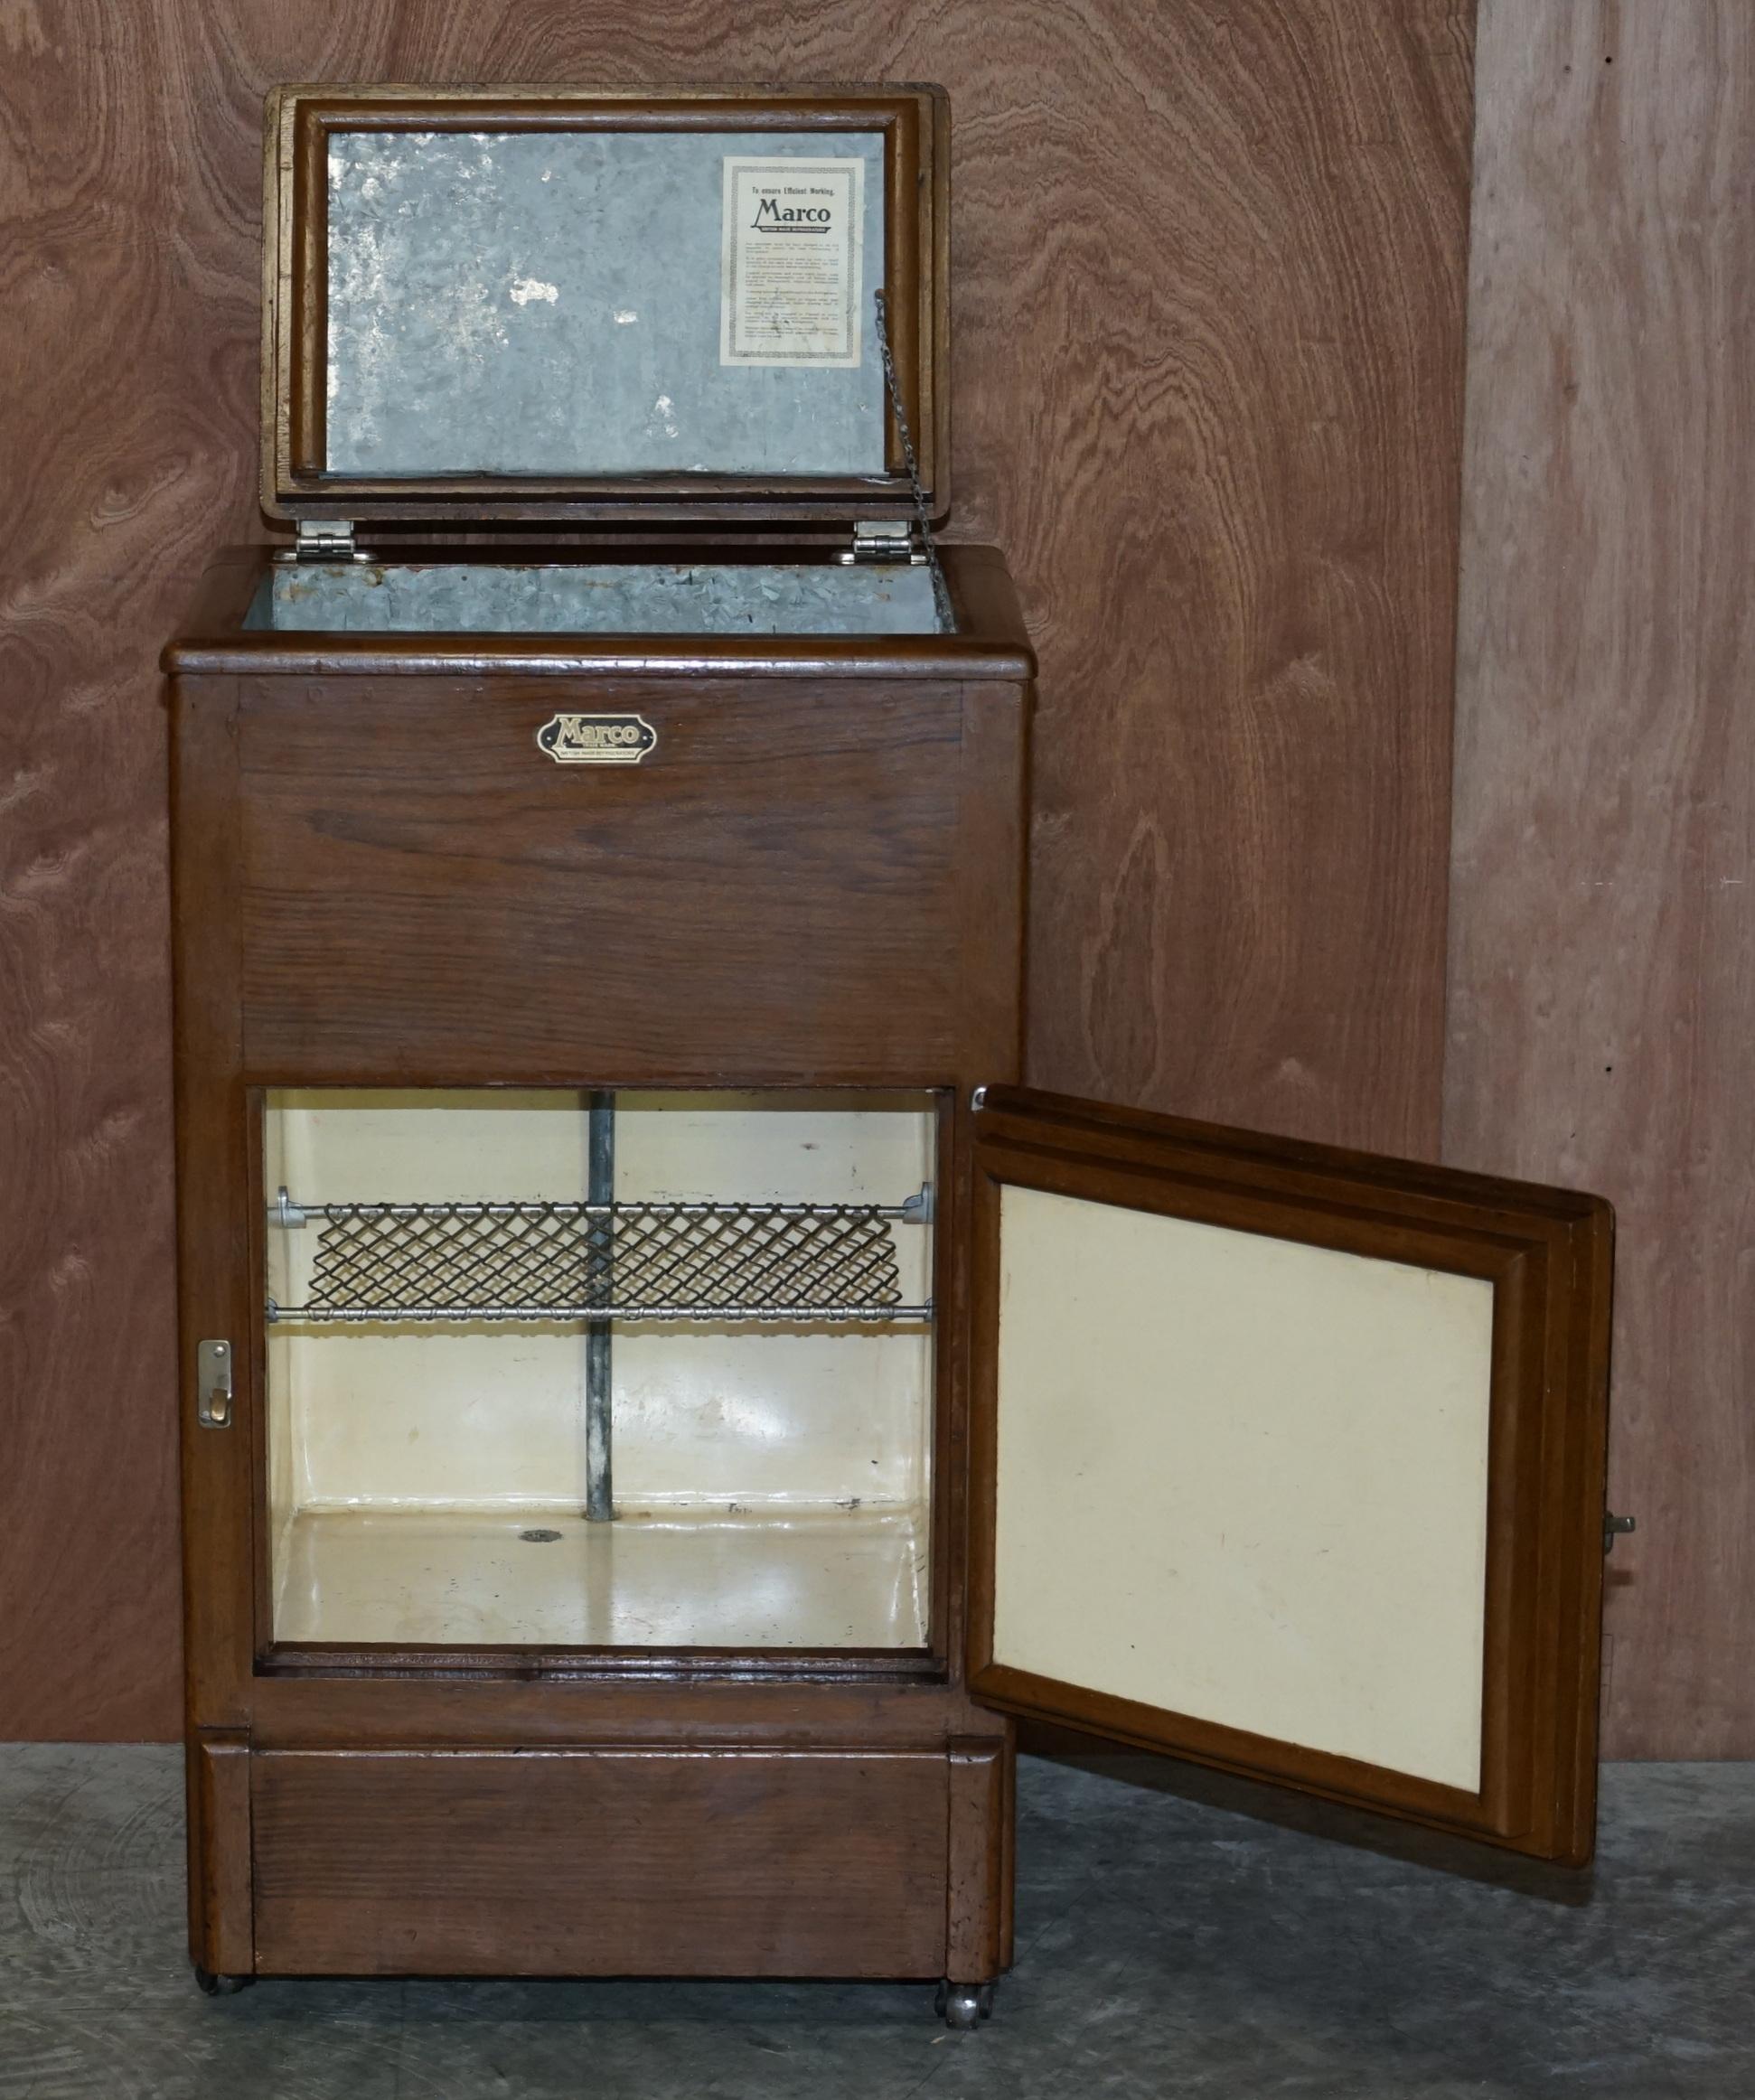 Stunning English Antique Wood Framed Fridge Ice Box Brilliant for Keeping Beer 7